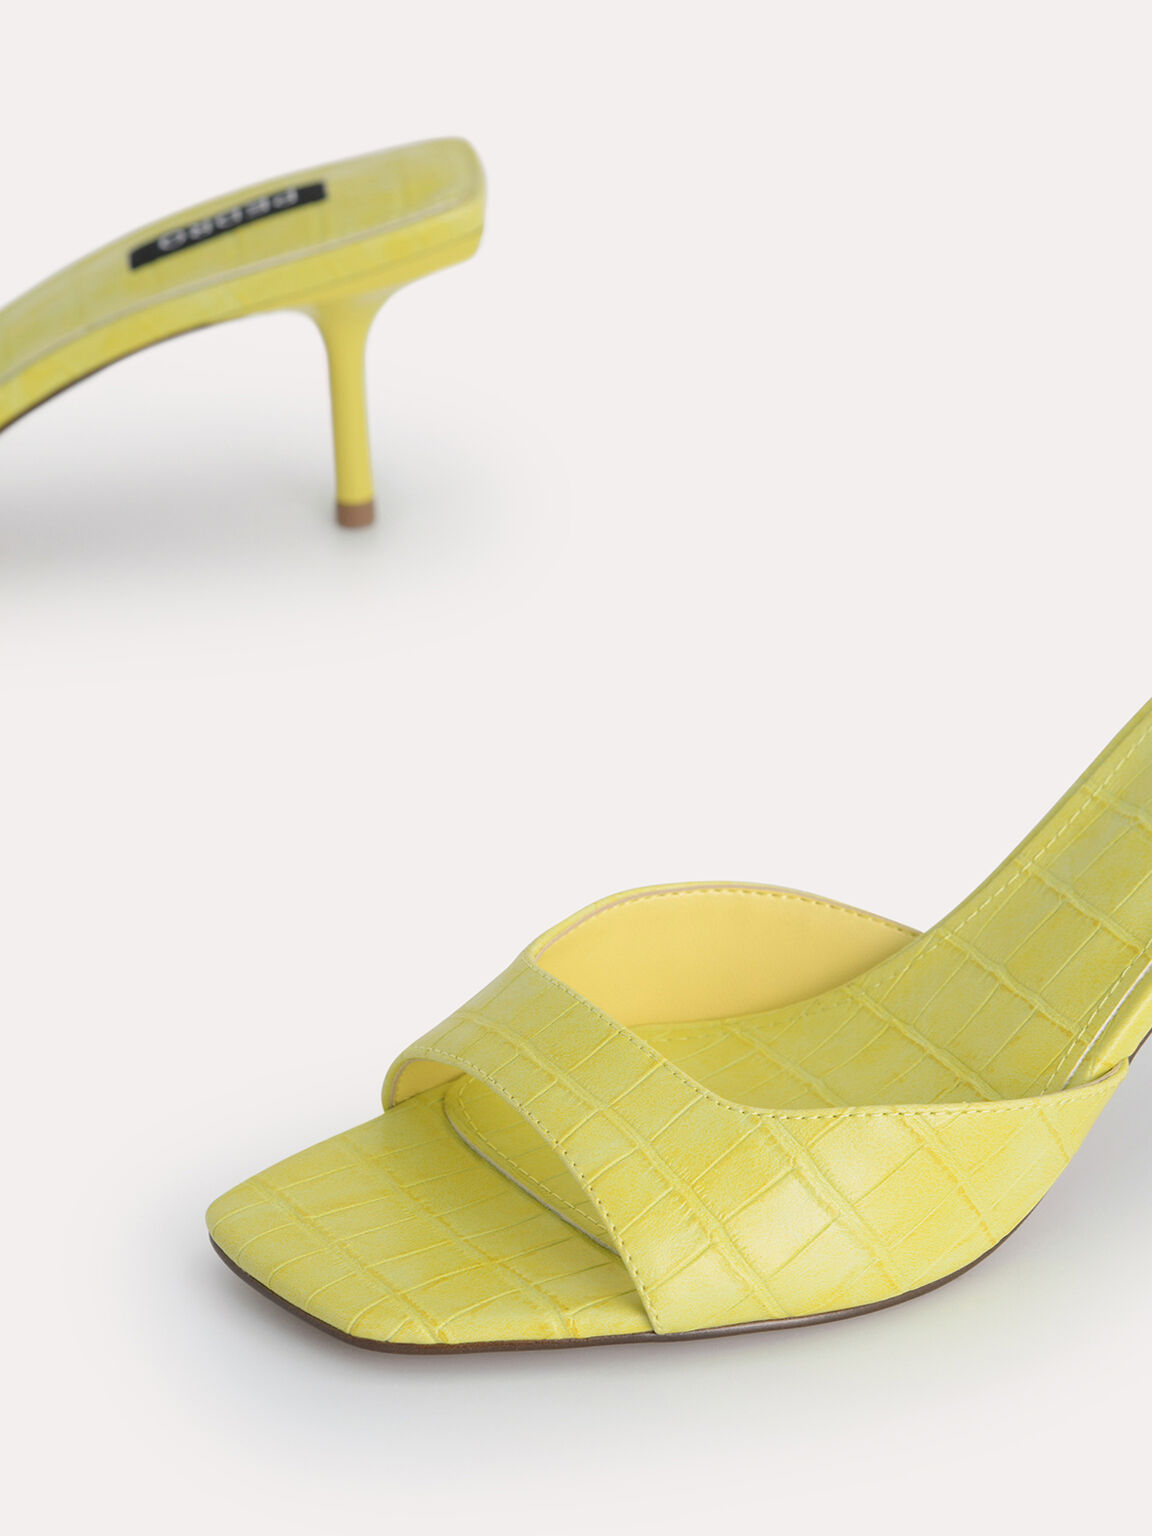 Croc-Effect Heeled Sandals, Yellow, hi-res